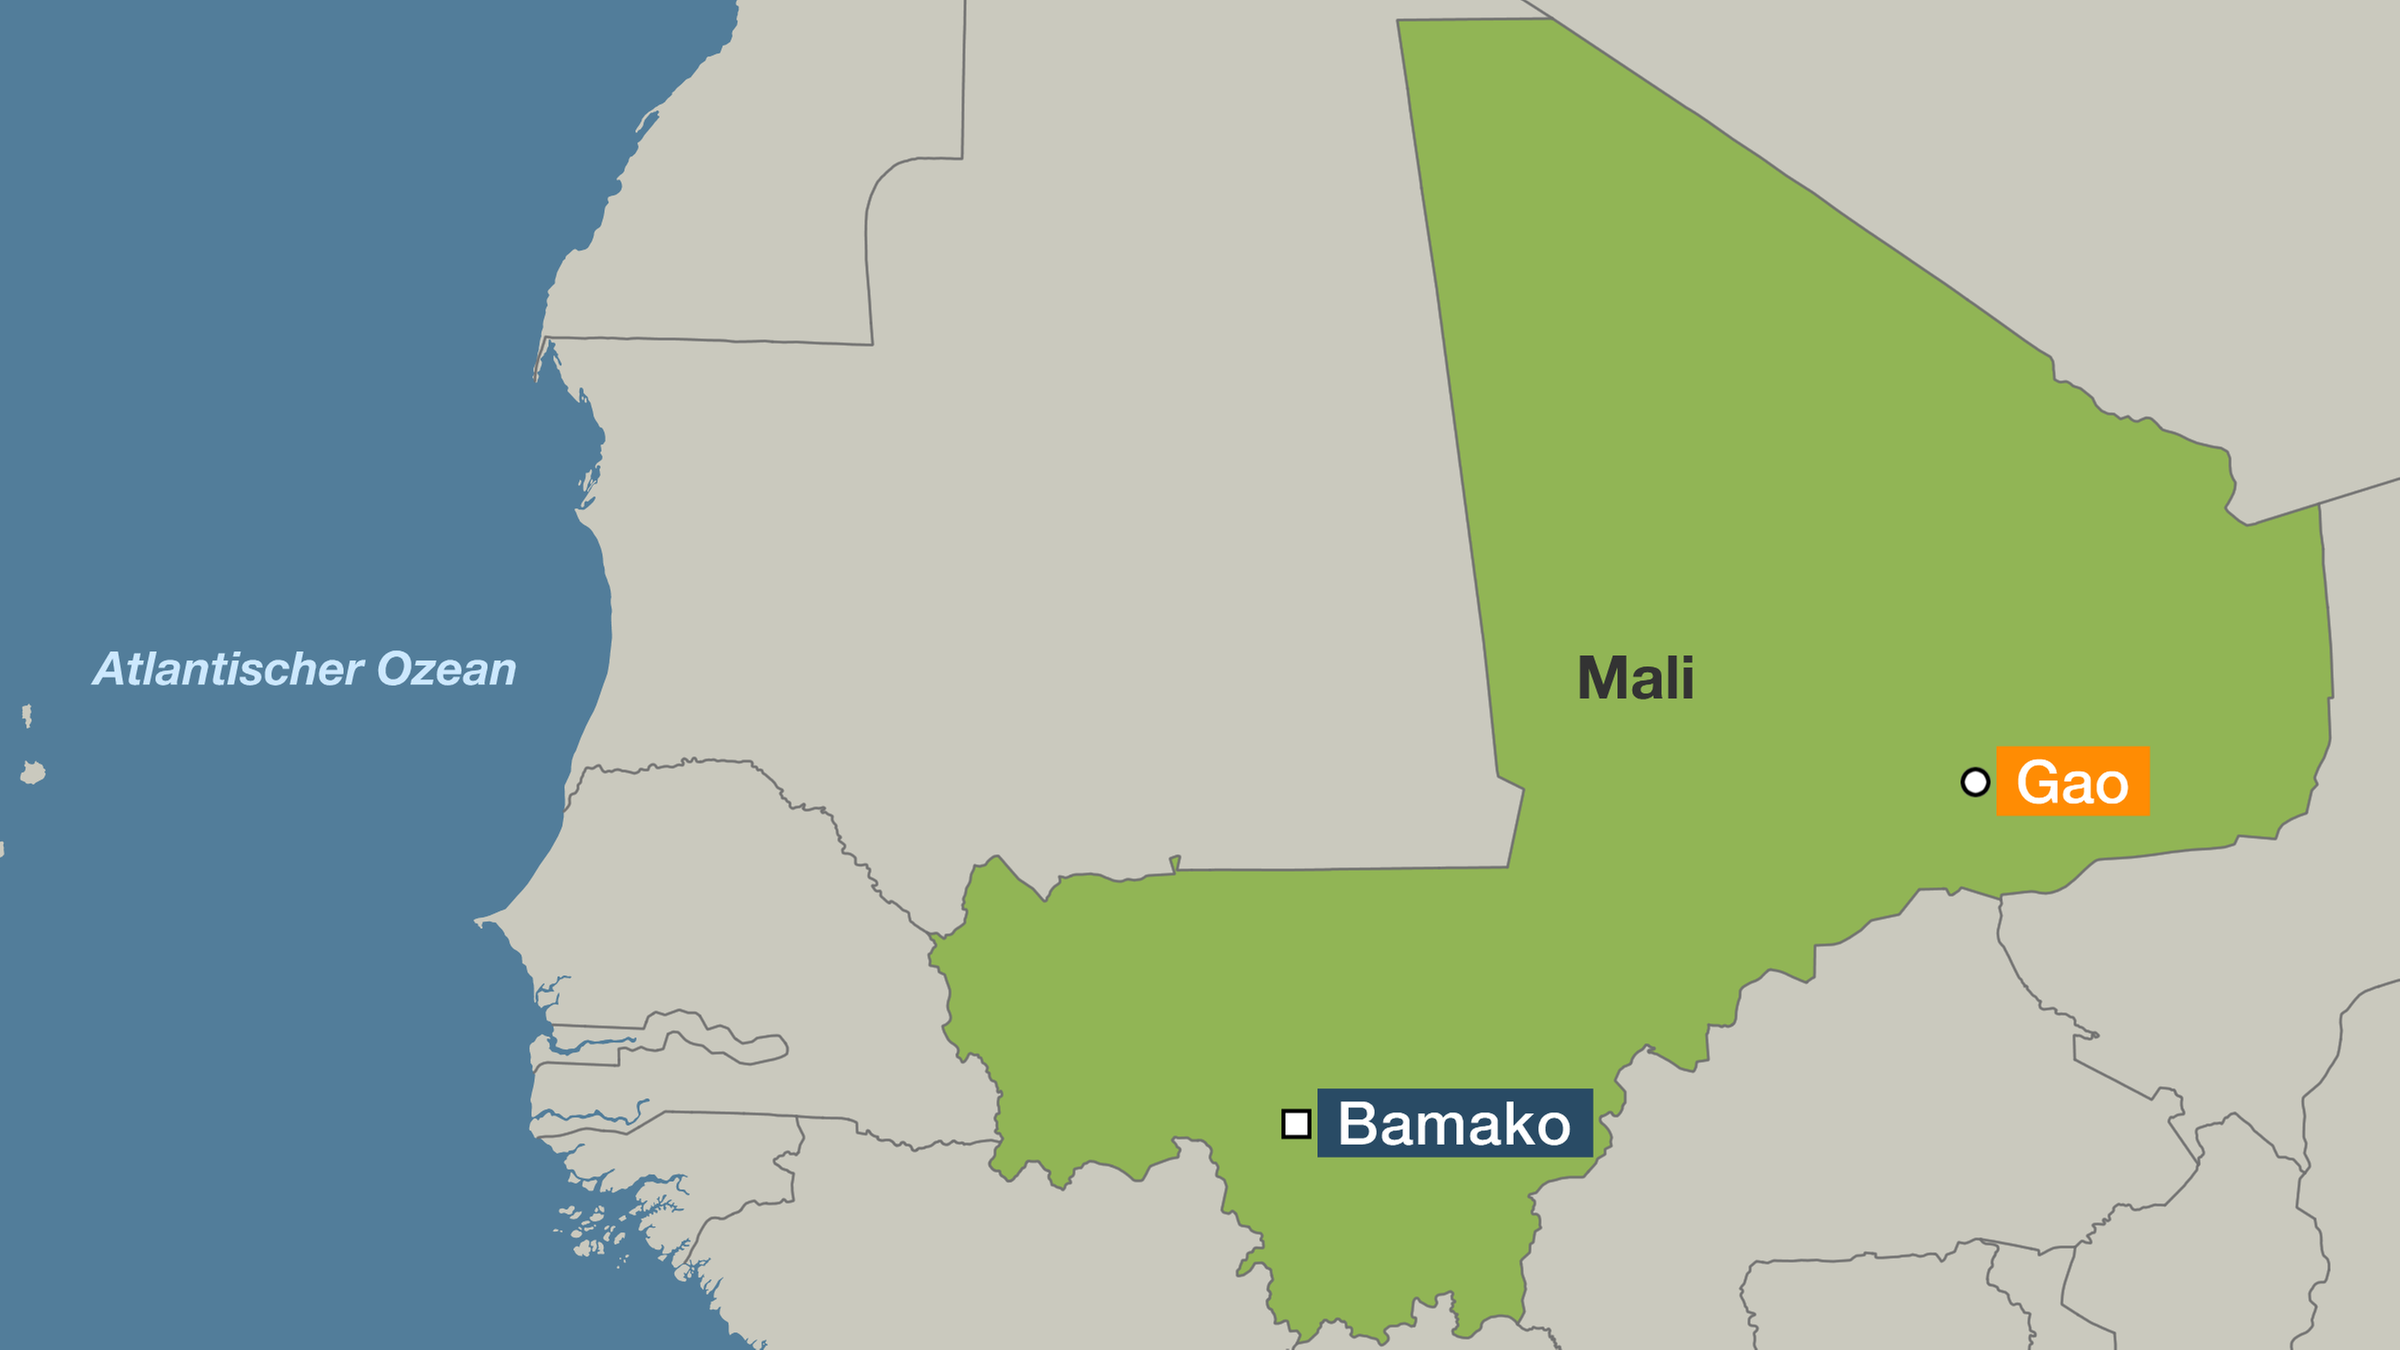 Karte: Mali - Bamako - Gao